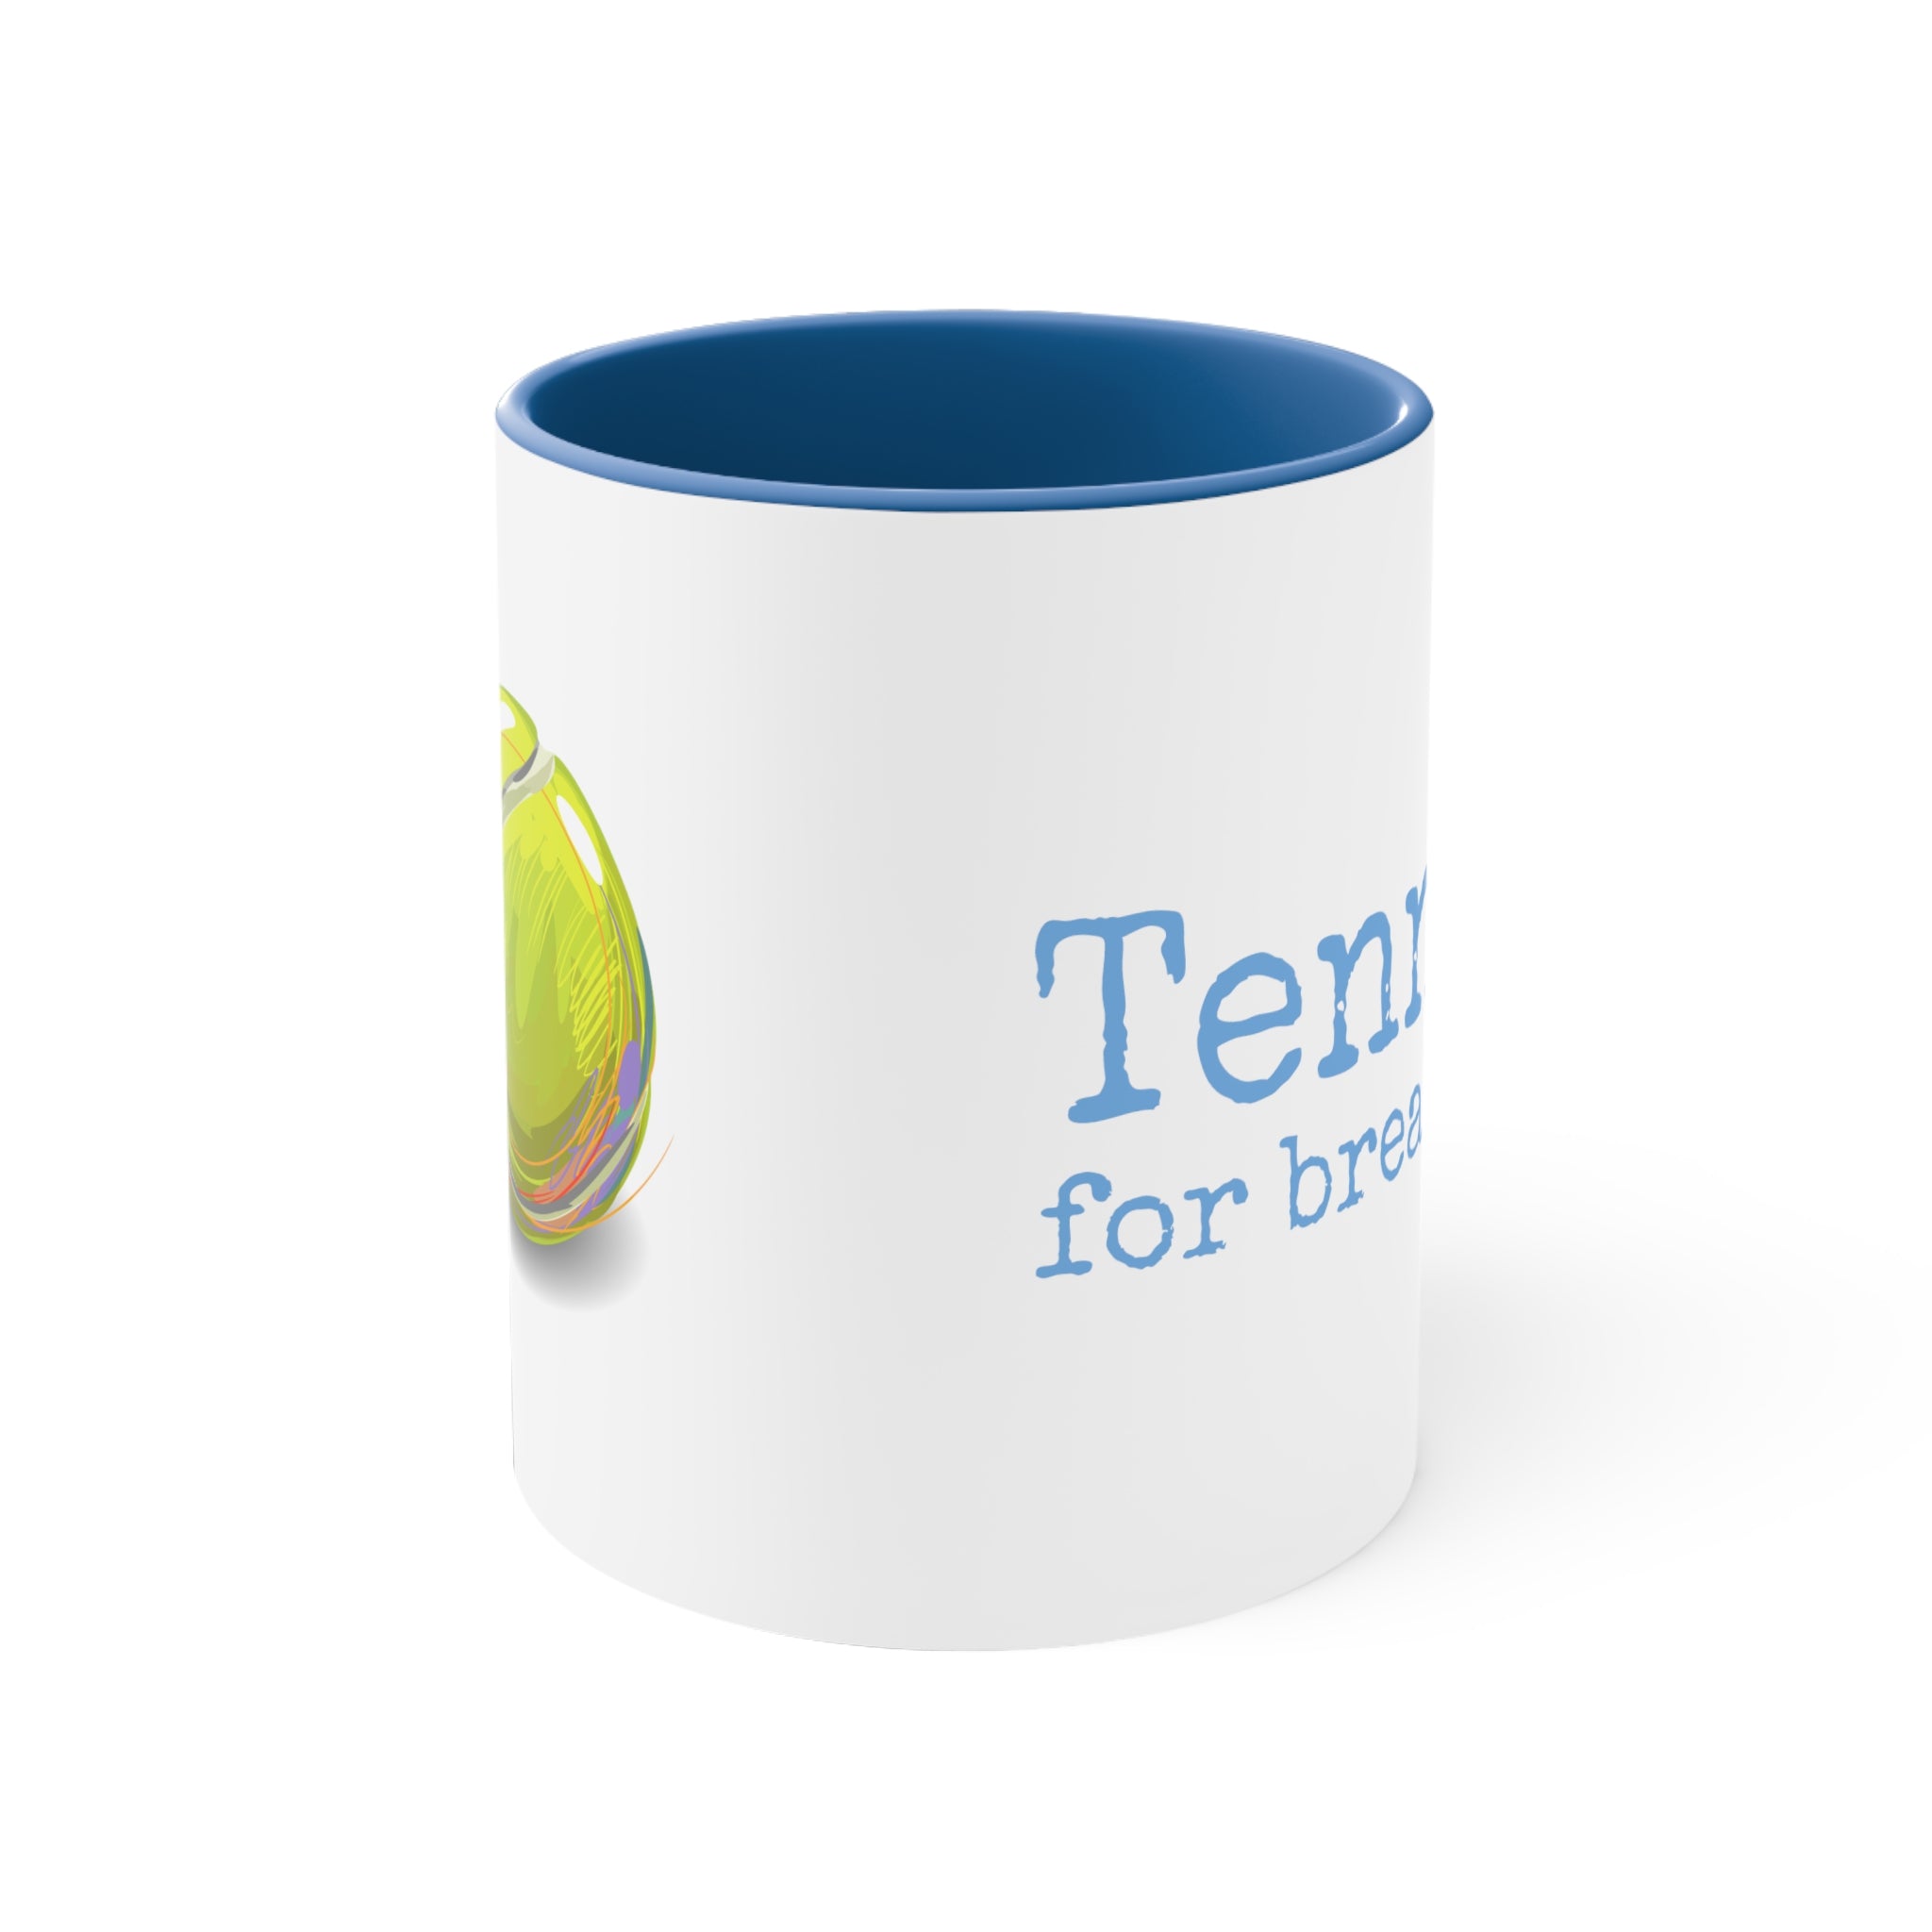 Blue Accent Ceramic Mug 11oz - Tennis for breakfast